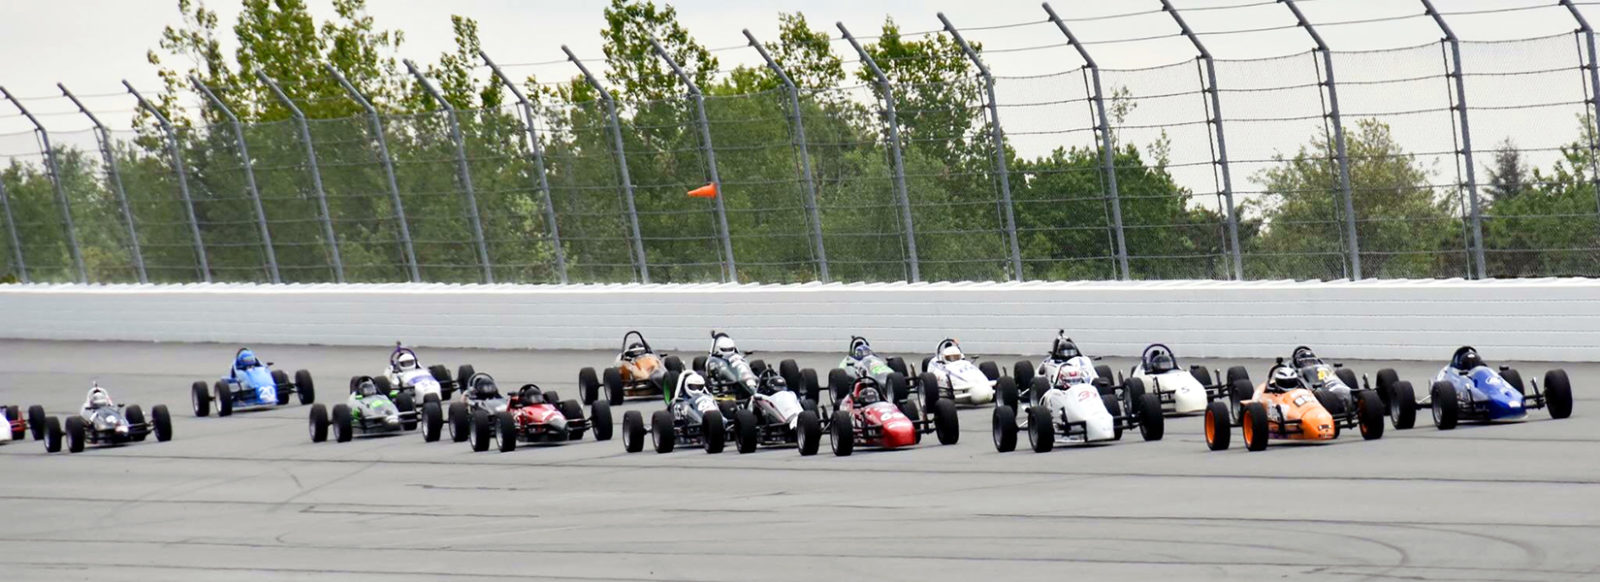 Pocono Raceway SCCA Race 2017